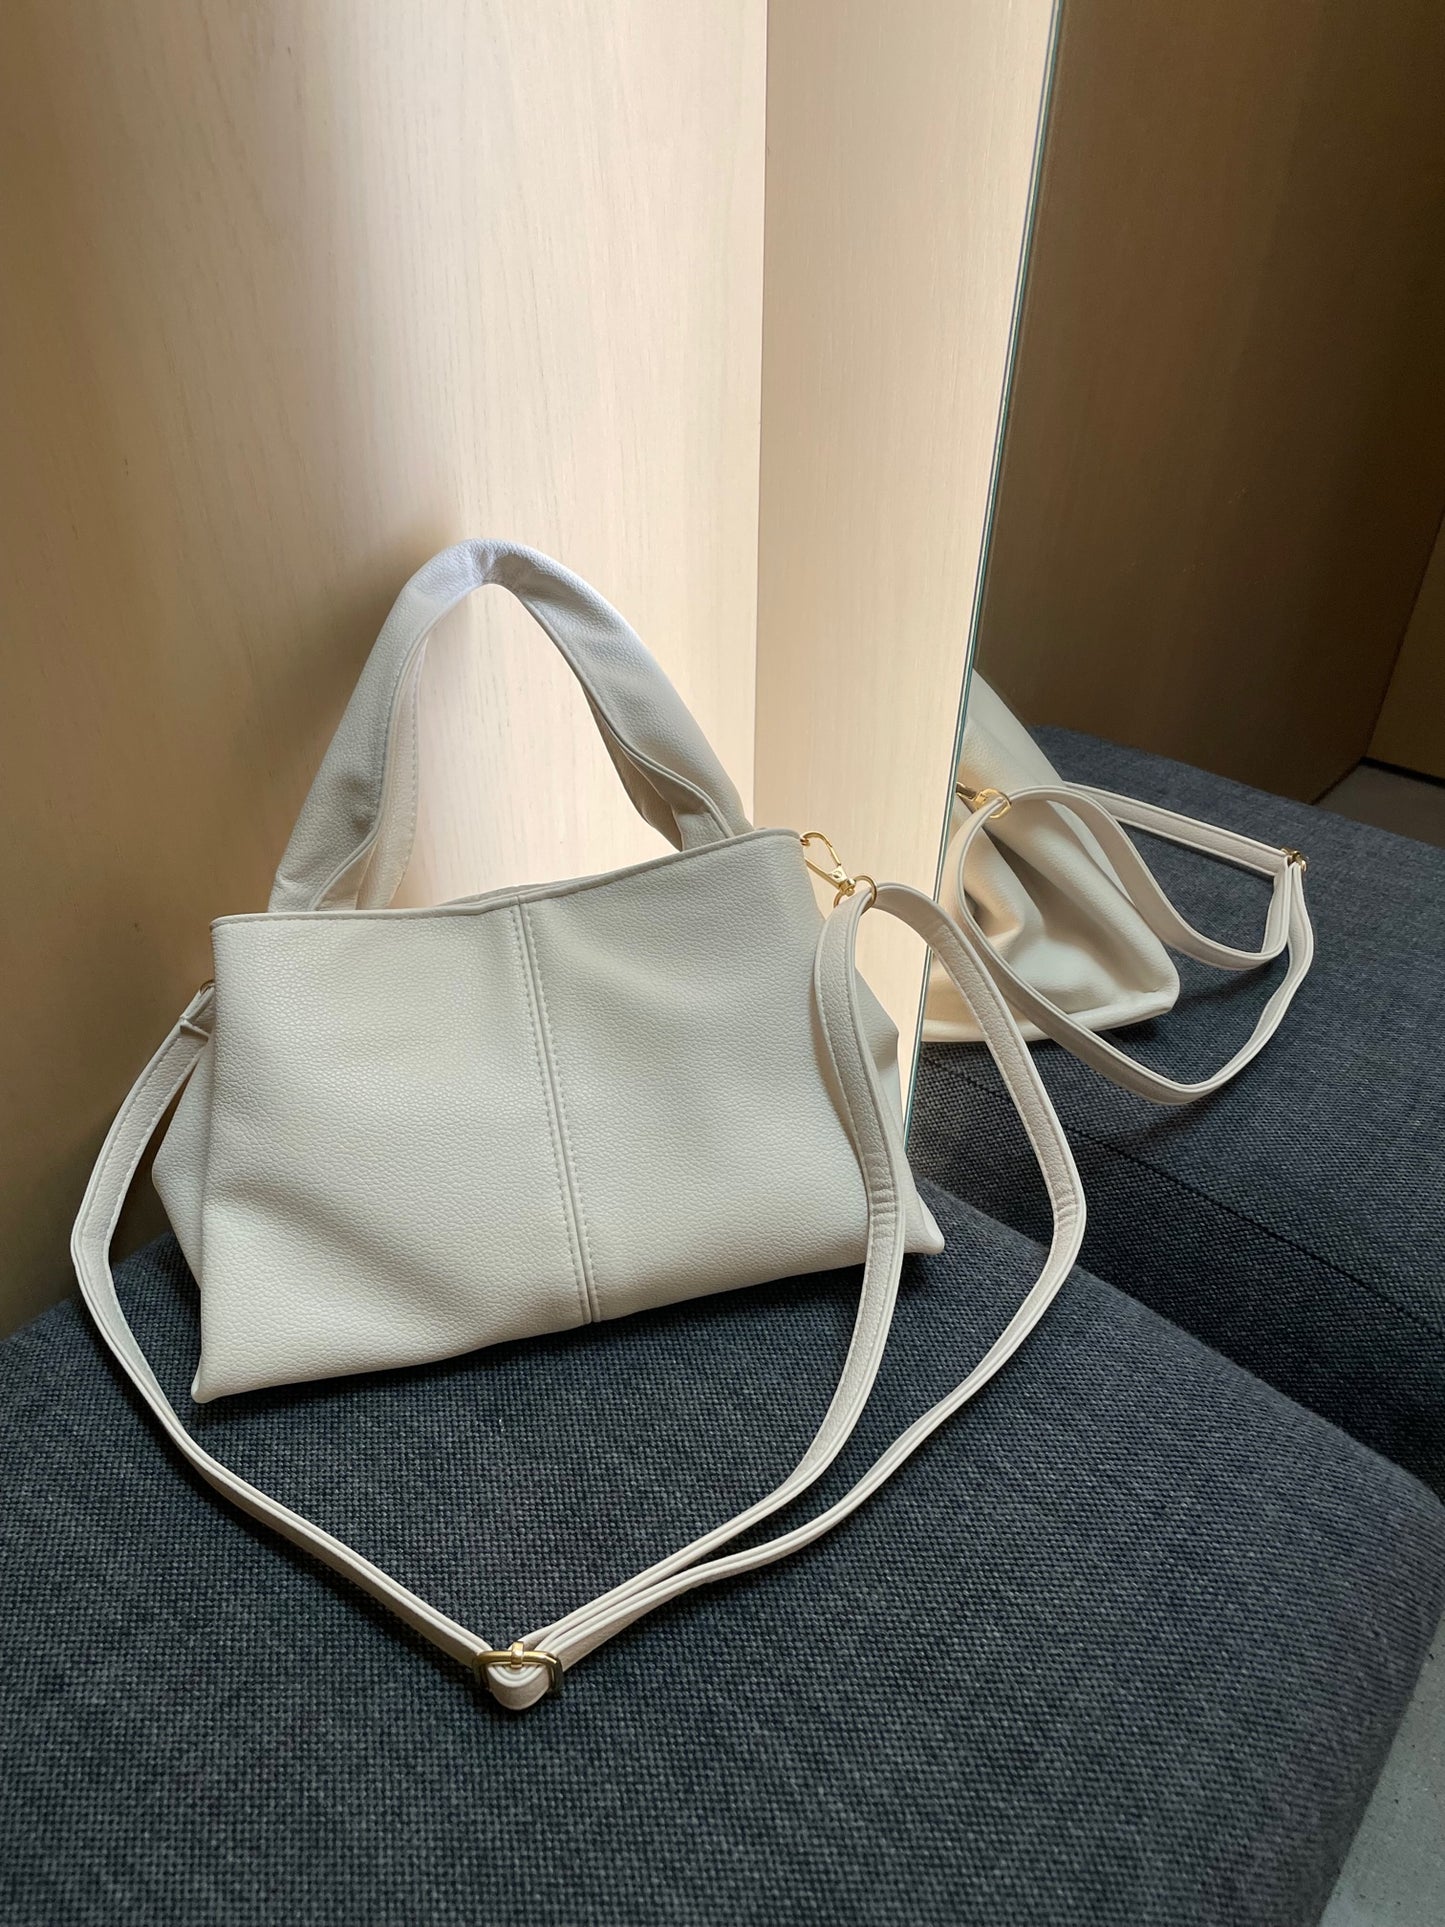 Minimalist PU Leather Satchel, Crossbody Bag, Adjustable Strap Bags, Large Capacity Shoulder Purse